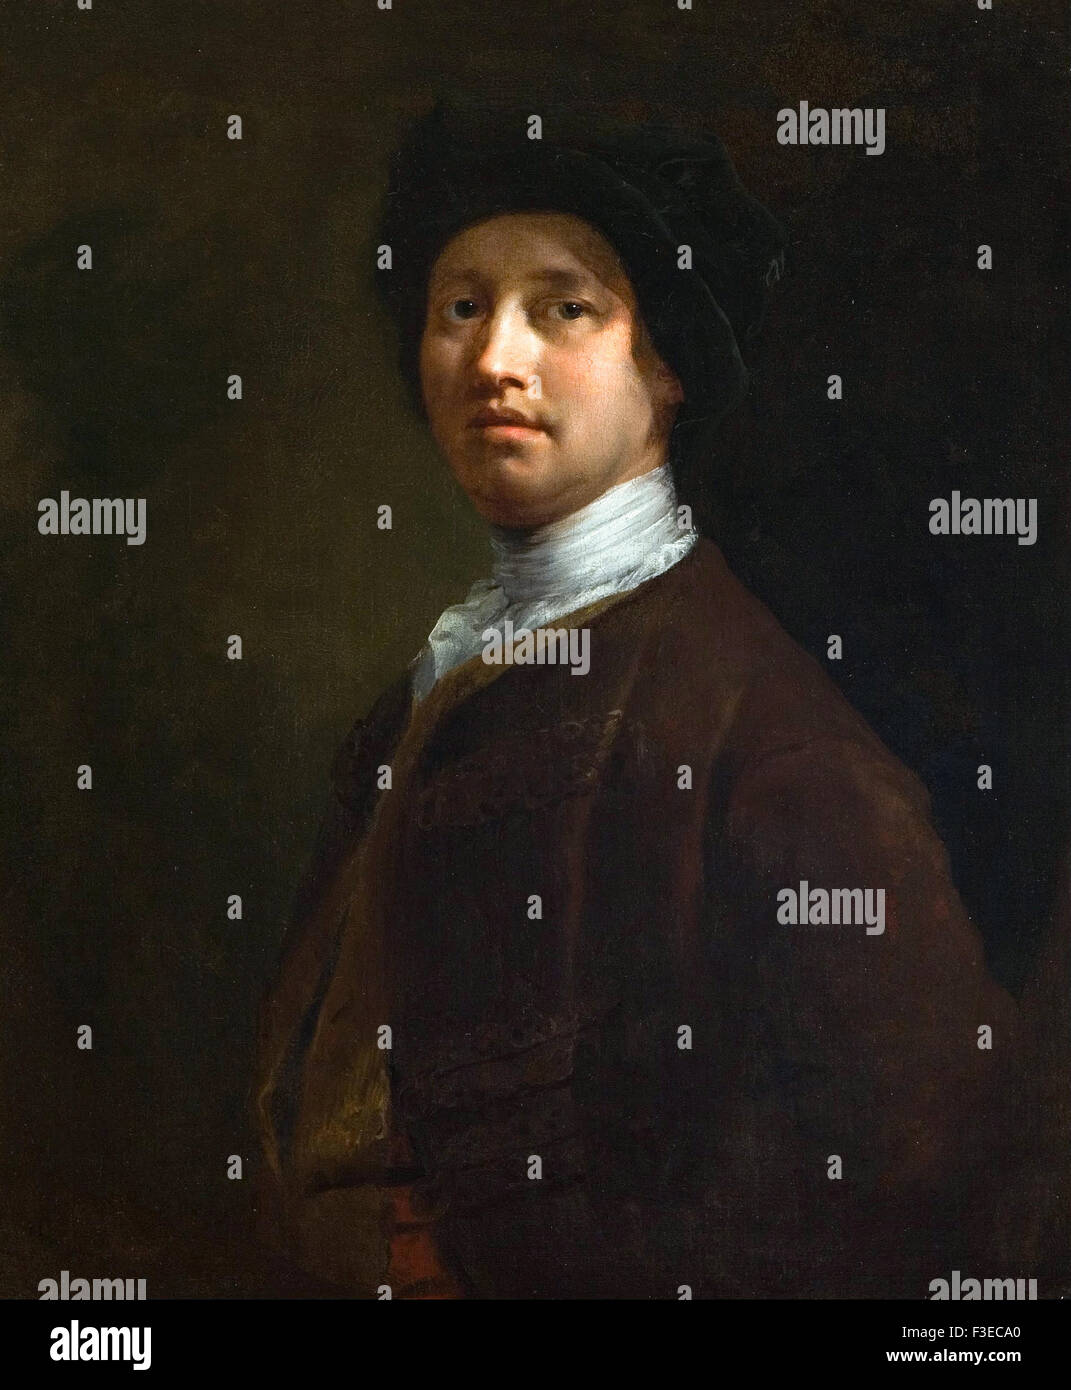 Sir Joshua Reynolds - Self Portrait as a Young Artist Stock Photo - Alamy